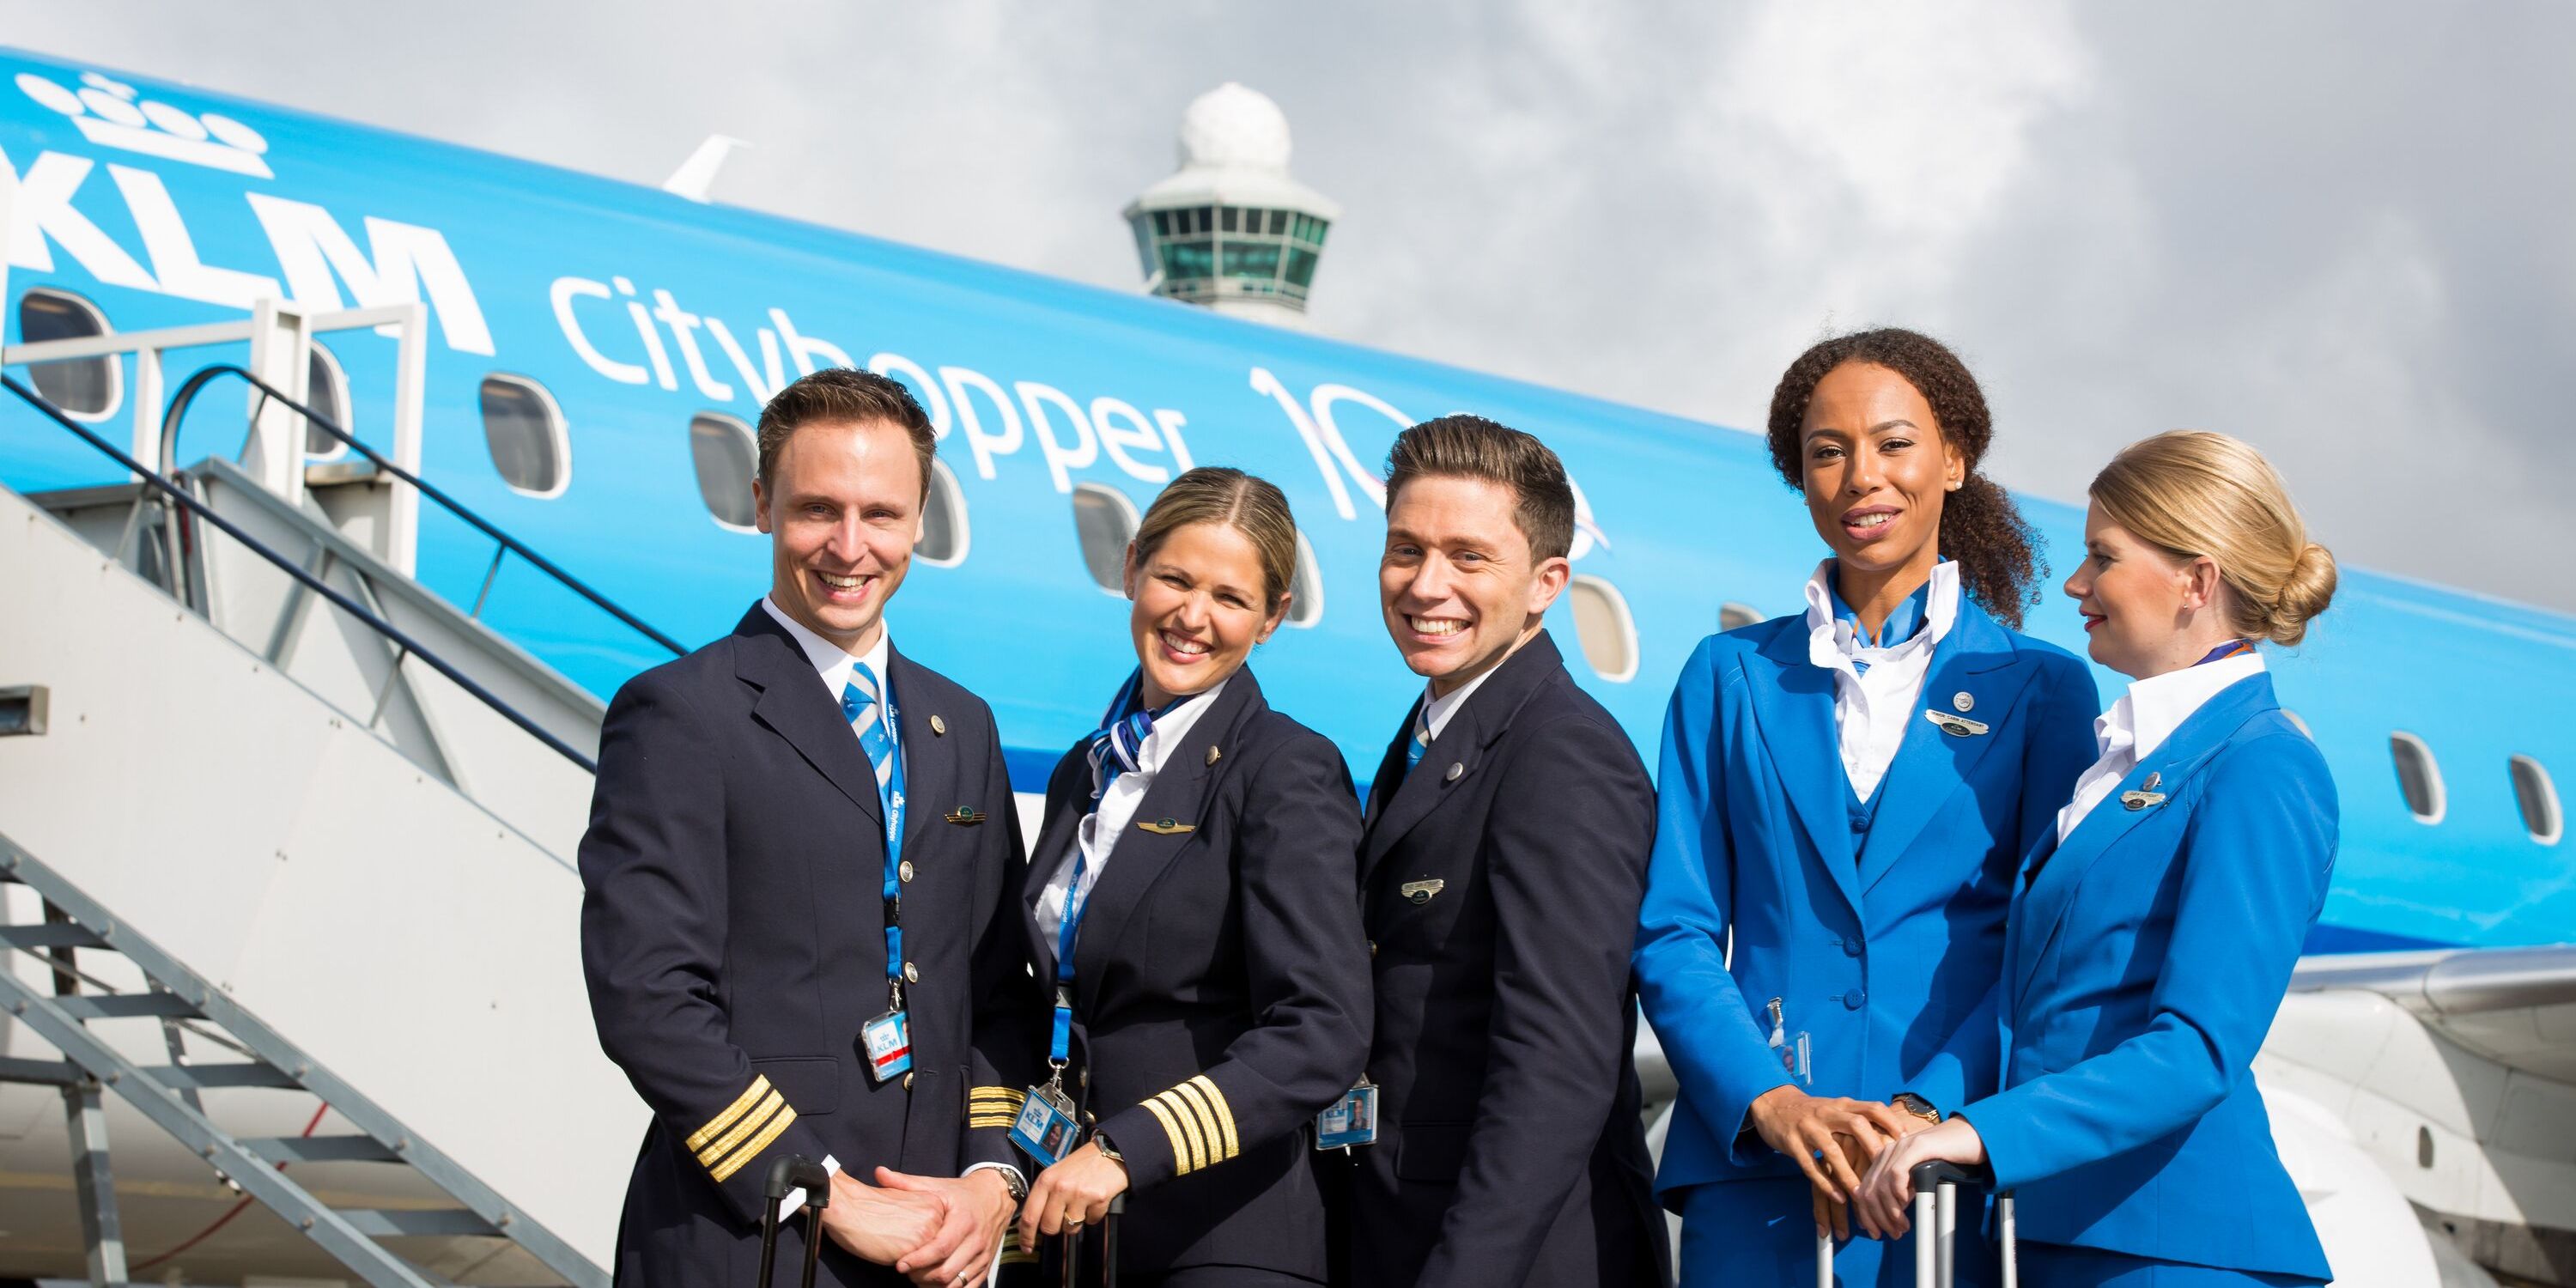 KLM Cityhopper crew